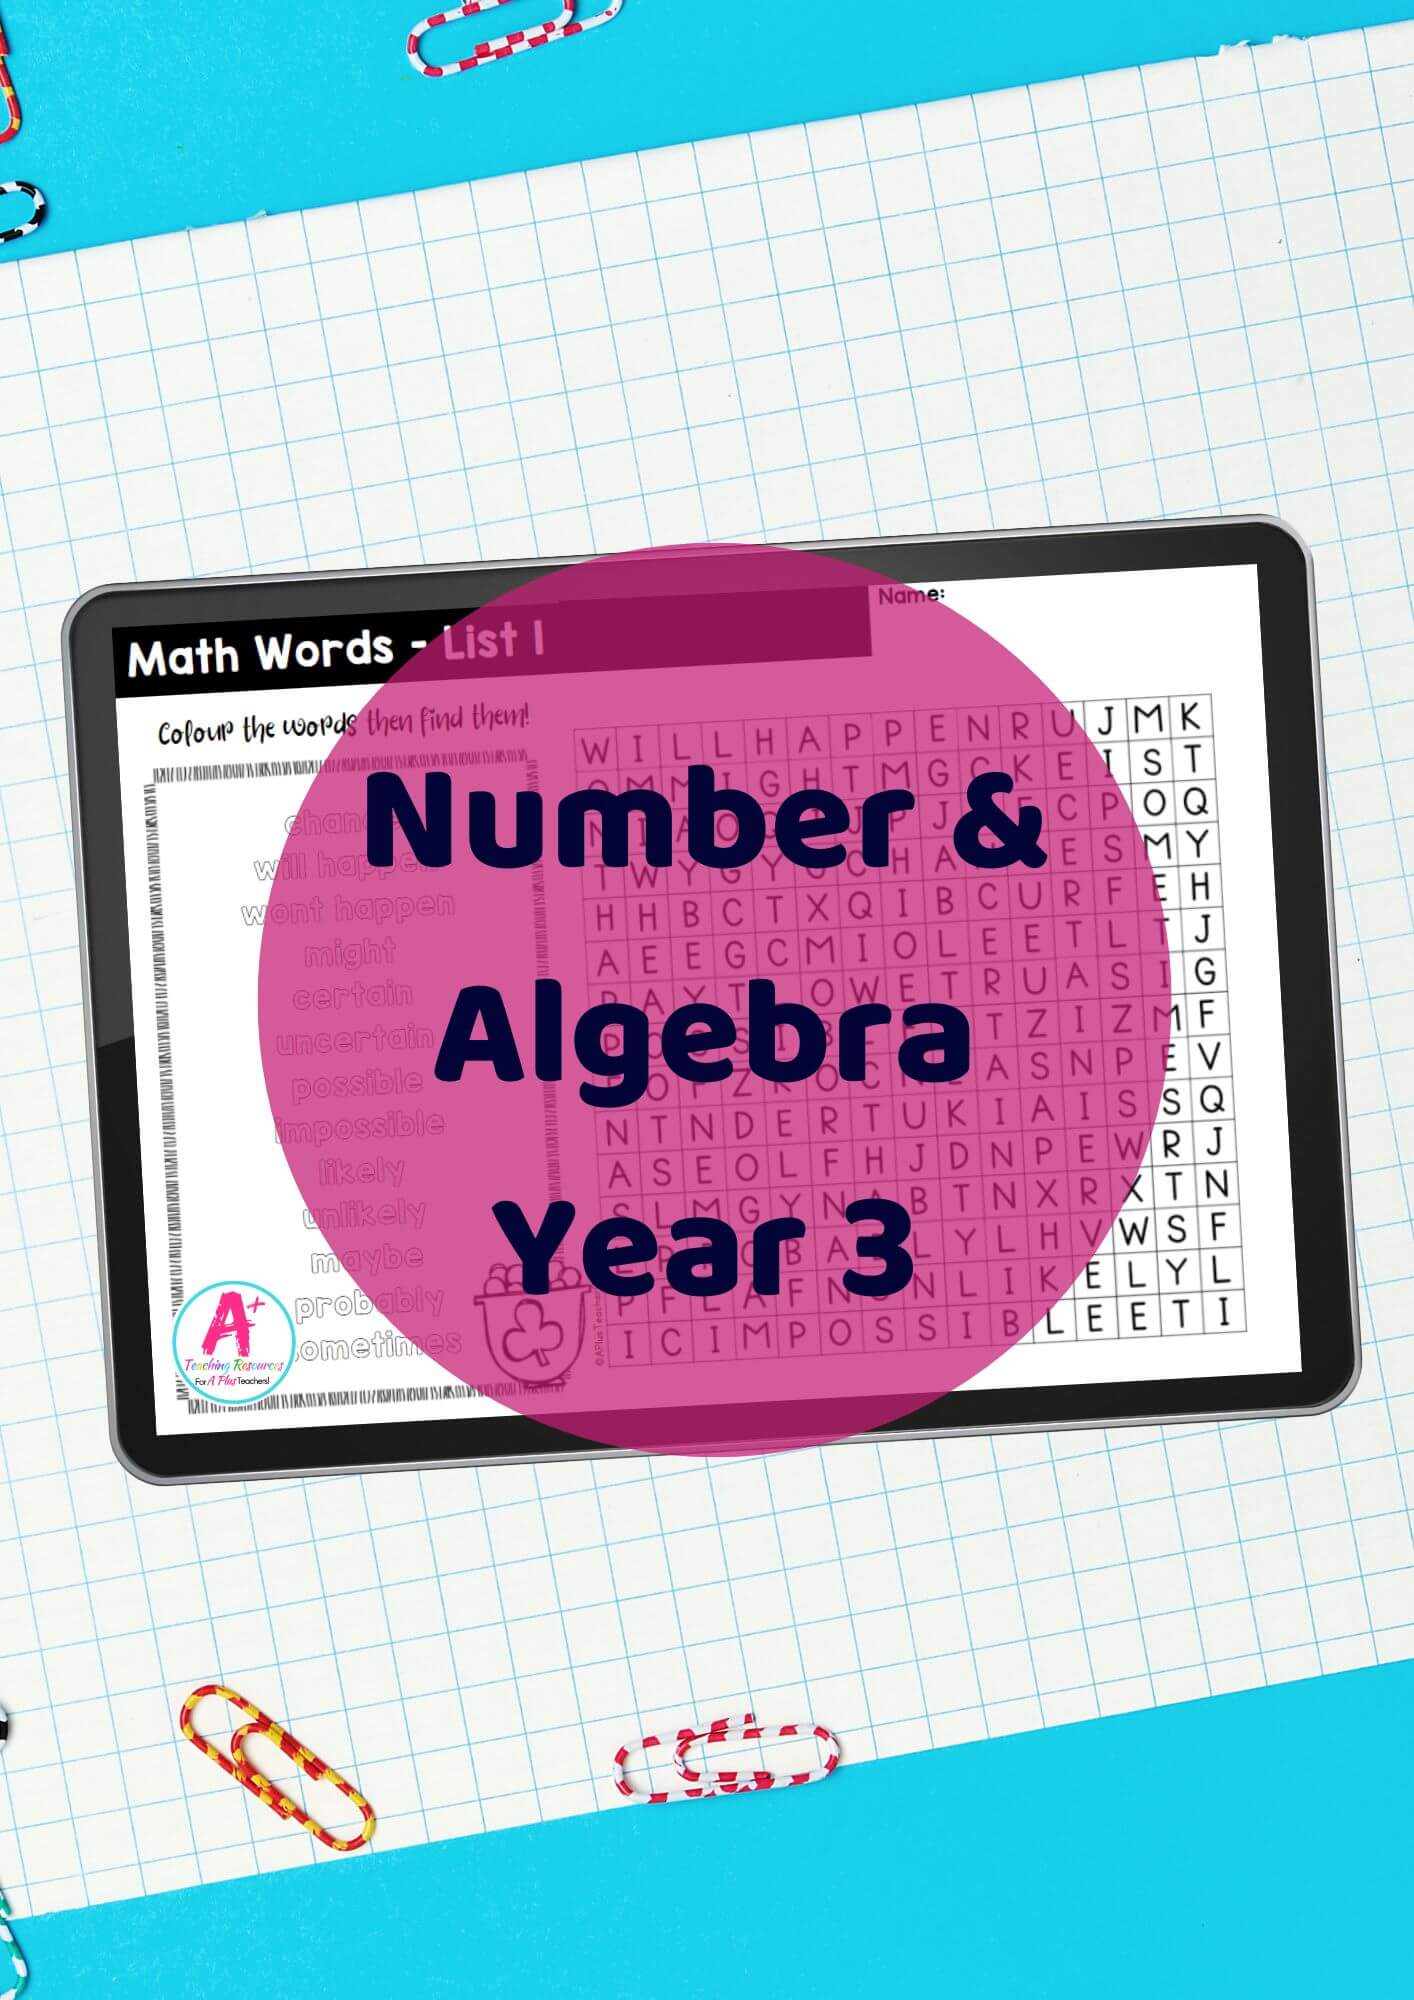 Number & Algebra Vocabulary POWERPOINT - Year 3